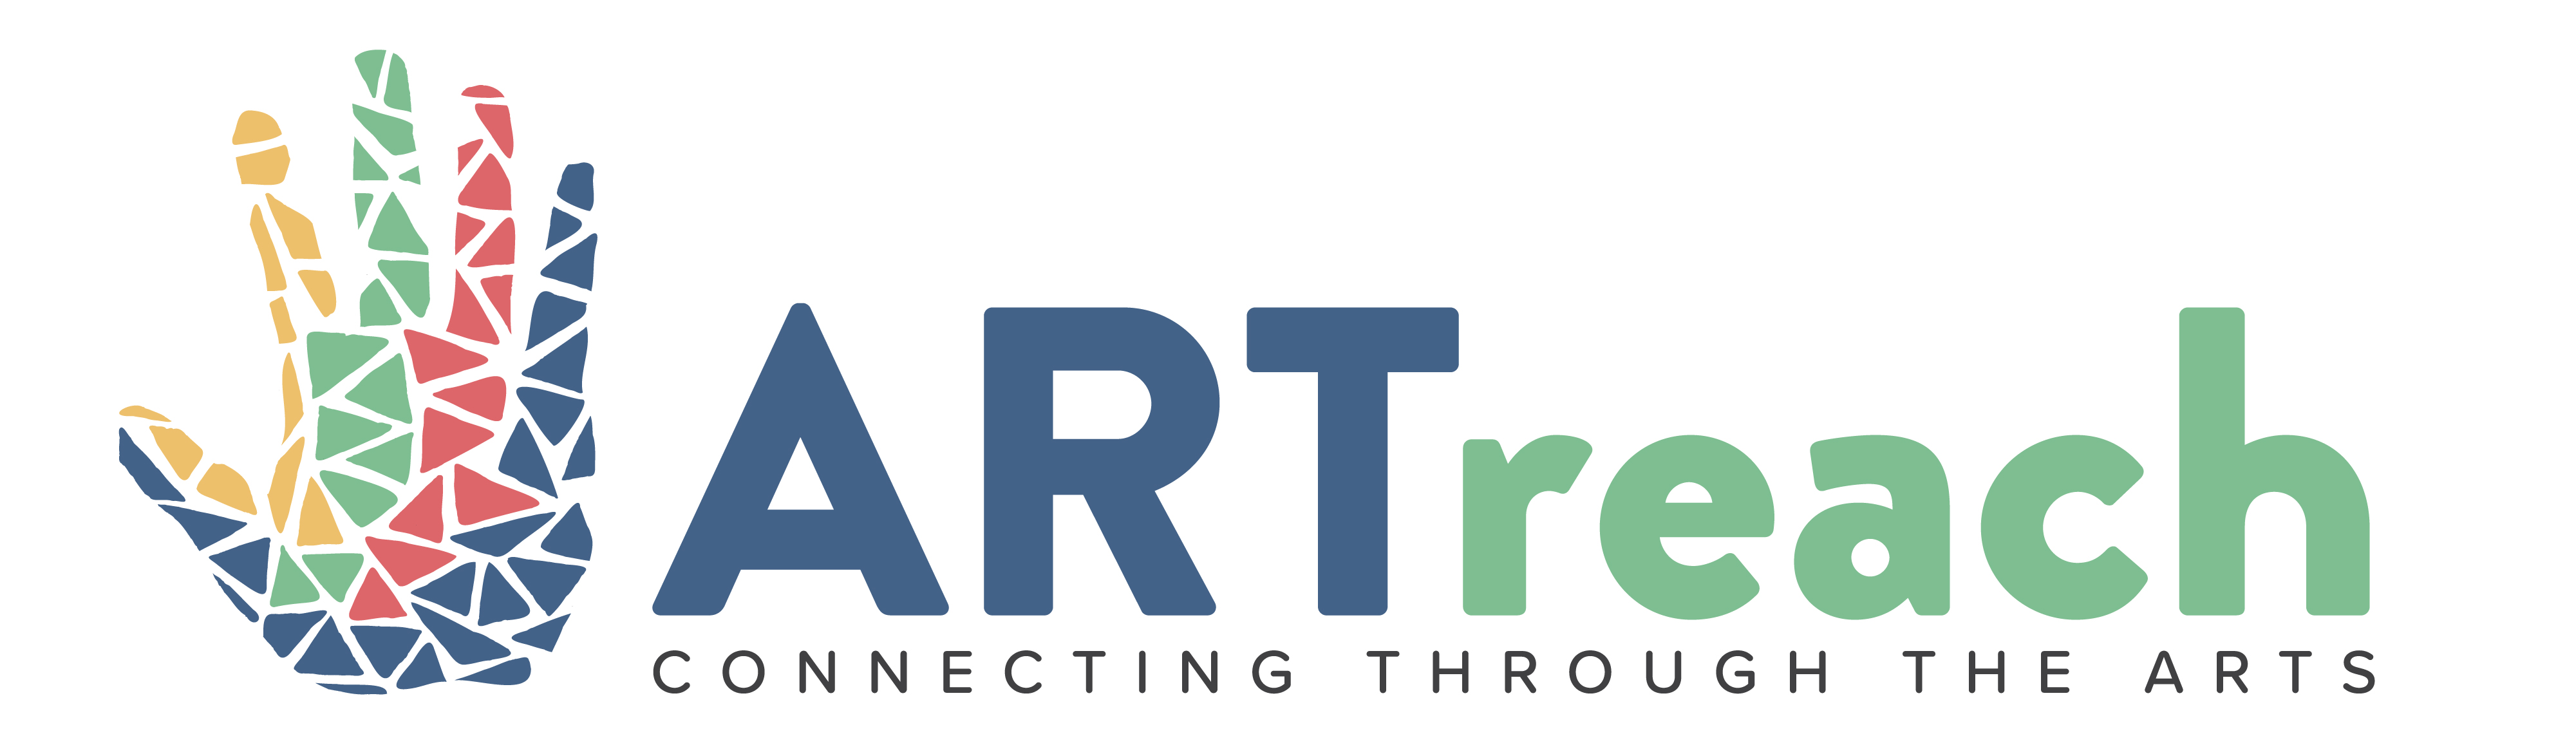 Katy ARTreach logo